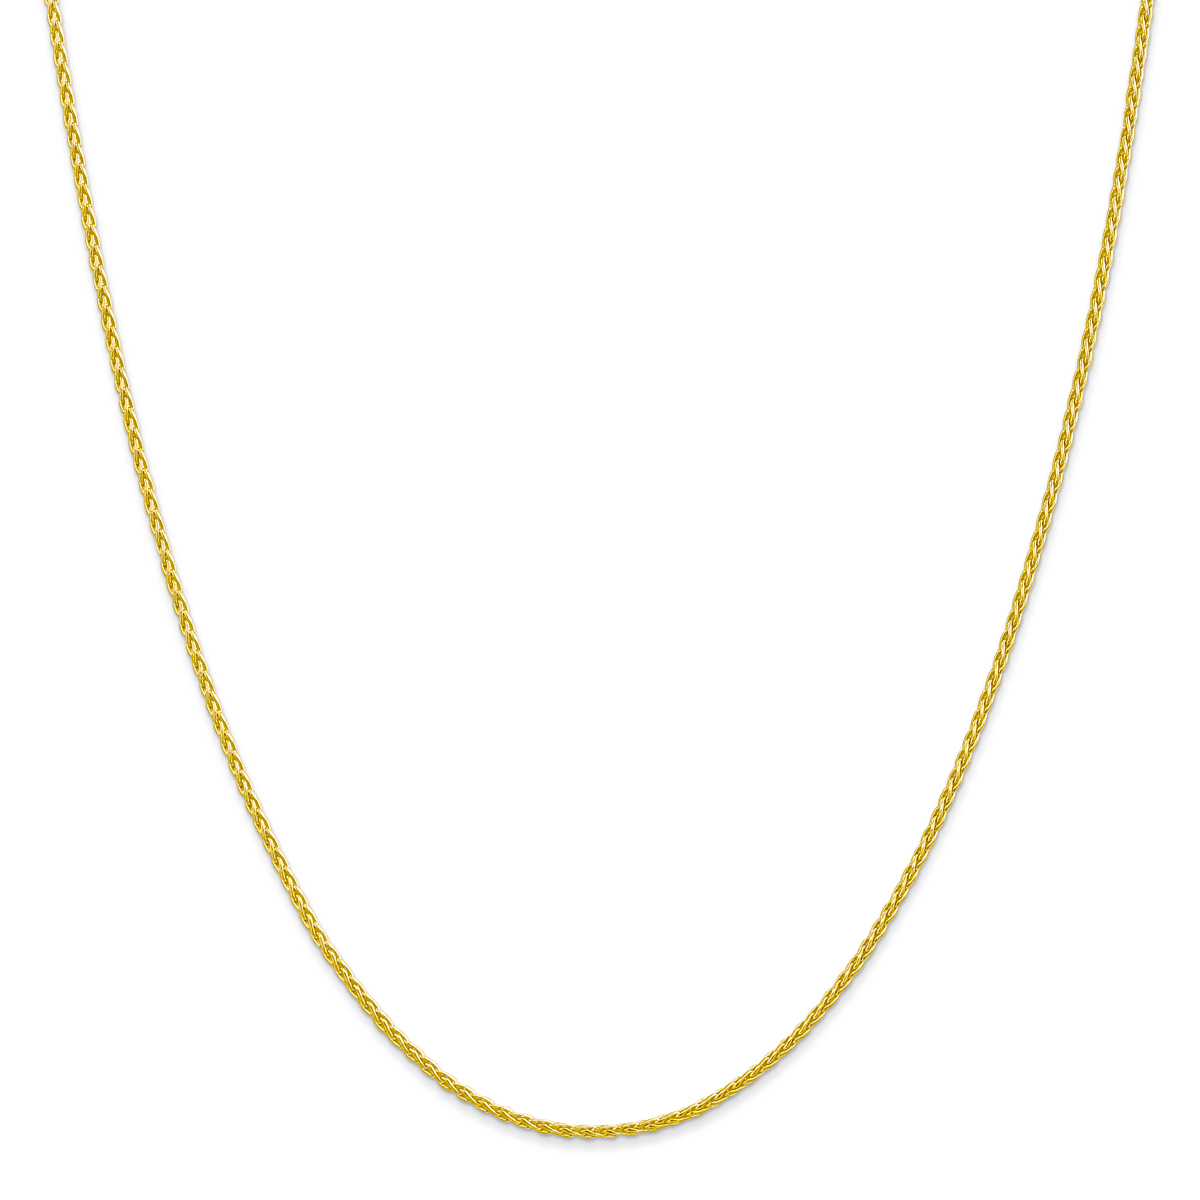 Adult Unisex Gold Classics(tm) 10kt. Parisian Chain 24in. Necklace